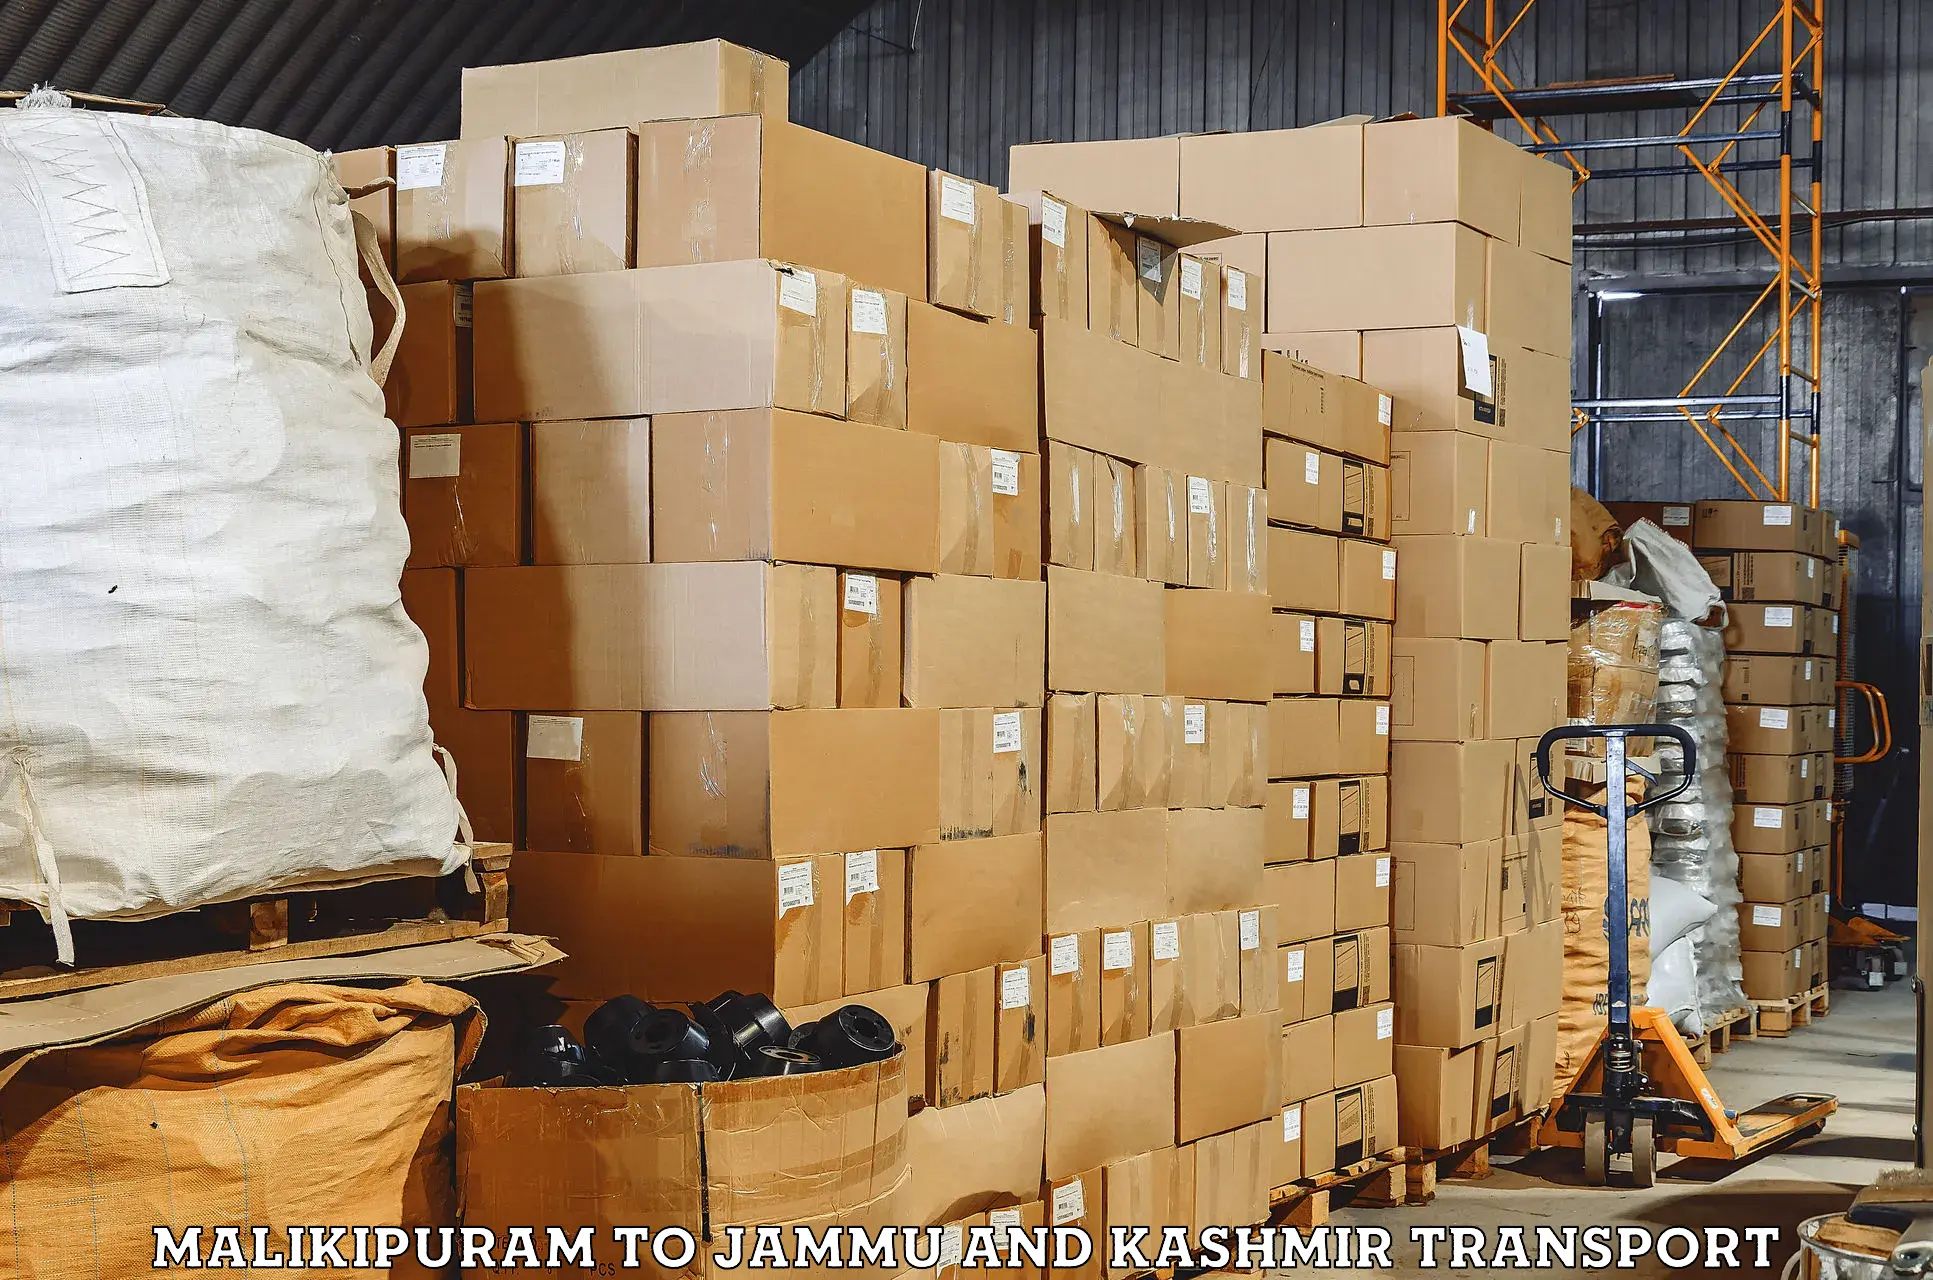 Online transport service Malikipuram to Jammu and Kashmir